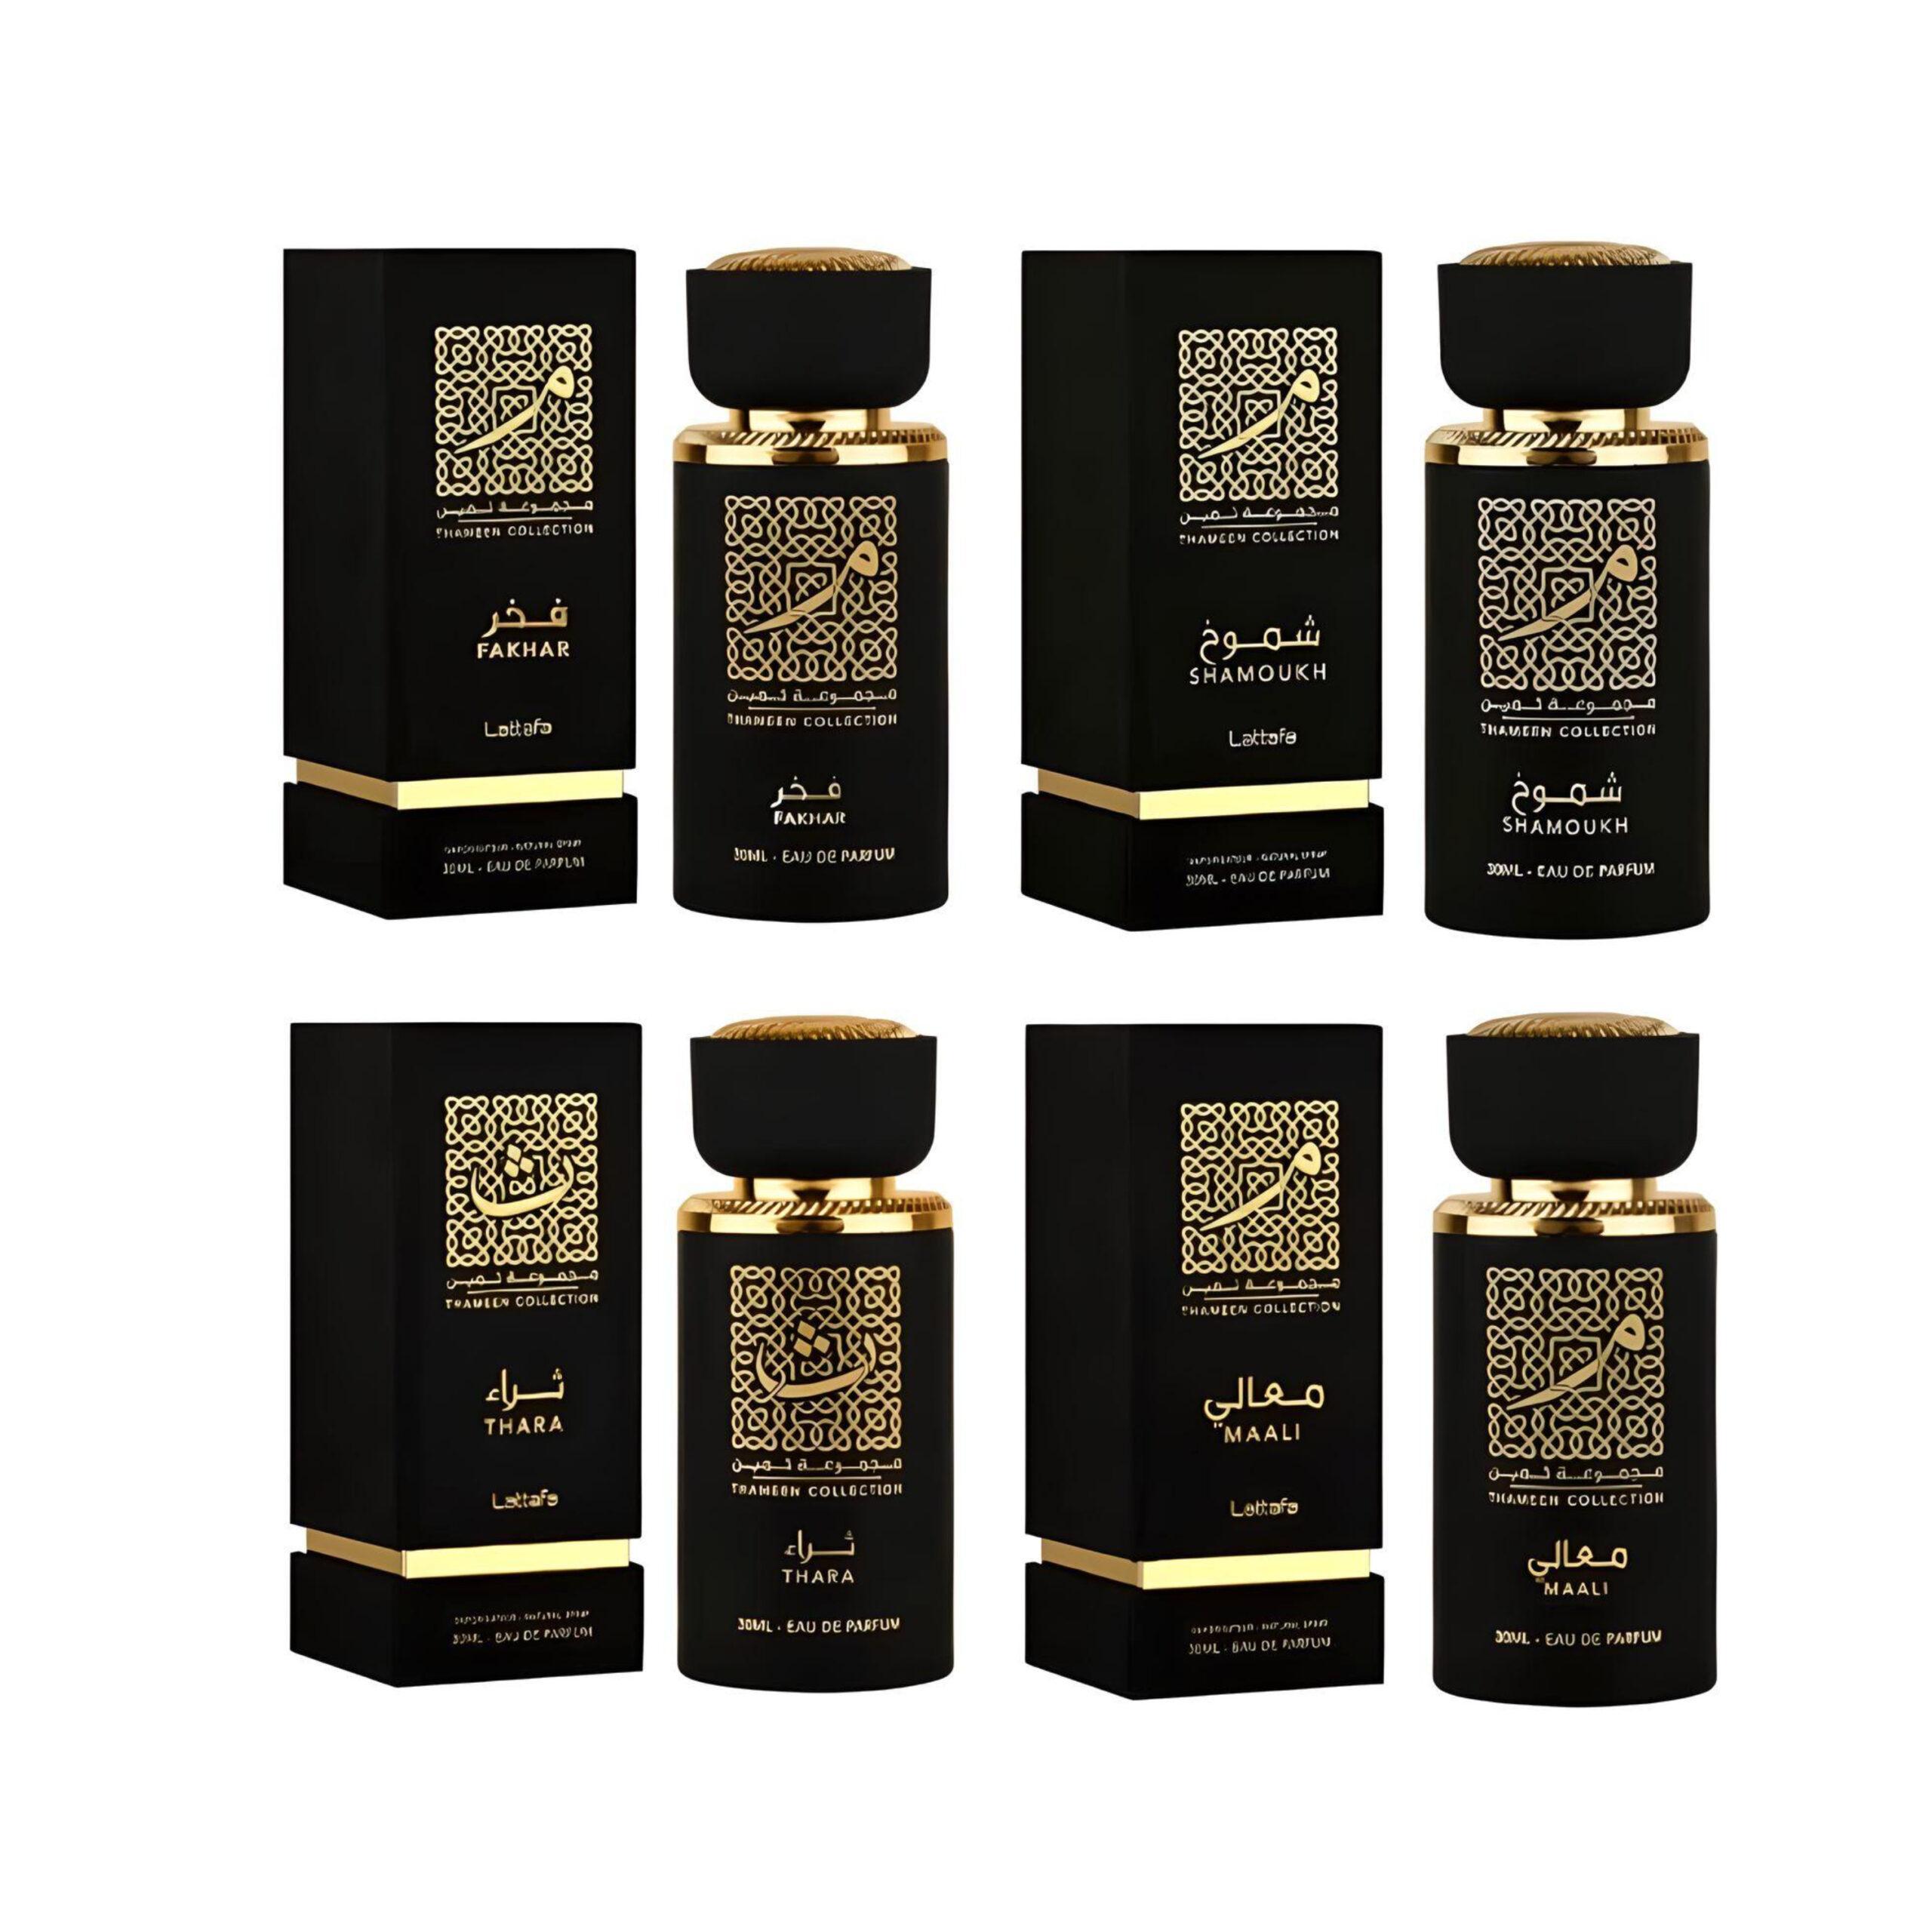 Thameen Collection Perfume 30Ml Edp By Lattafa